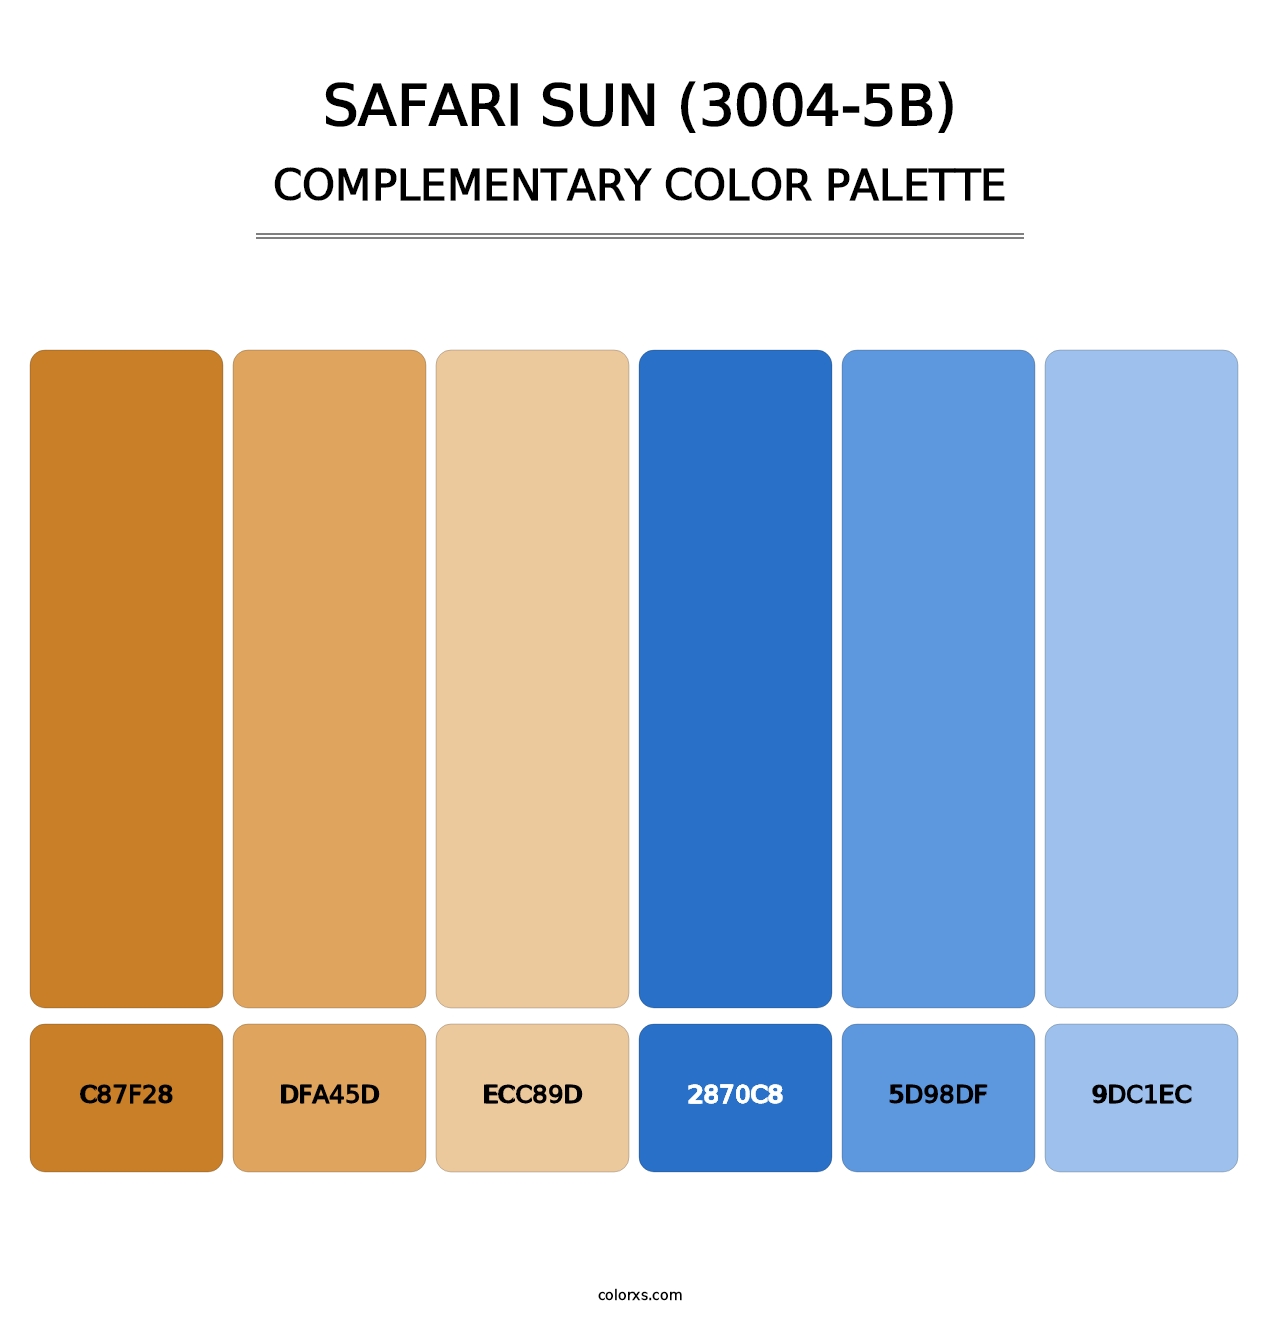 Safari Sun (3004-5B) - Complementary Color Palette